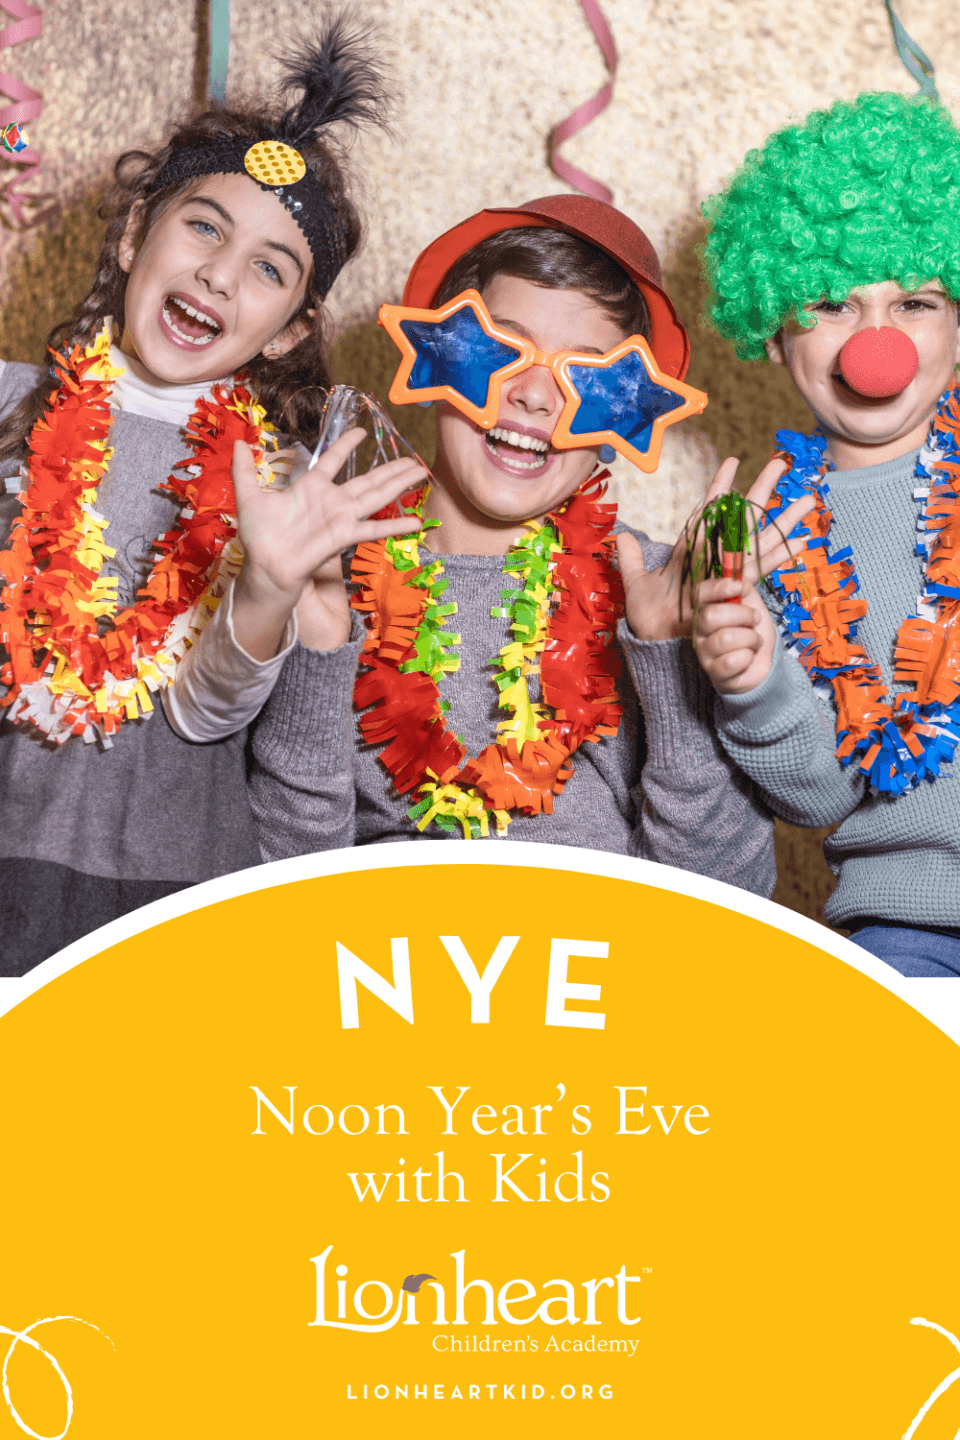 Kids celebrating New Year's Eve